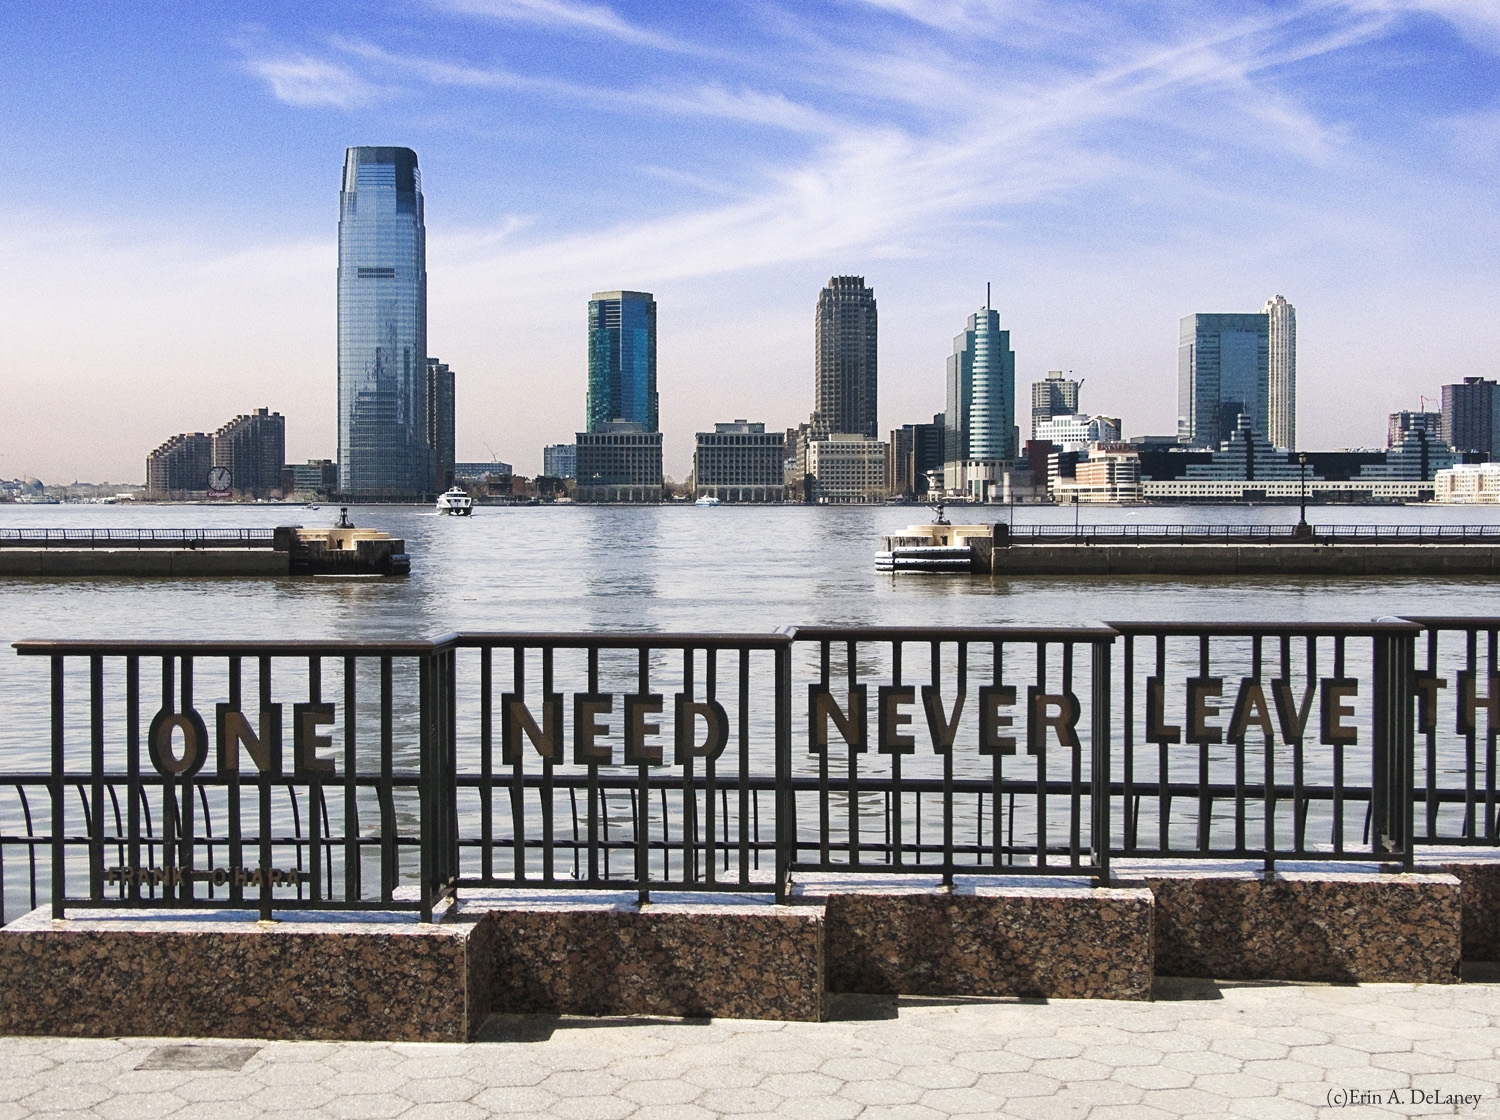 Jersey City Skyline, One Need Never Leave, 2014